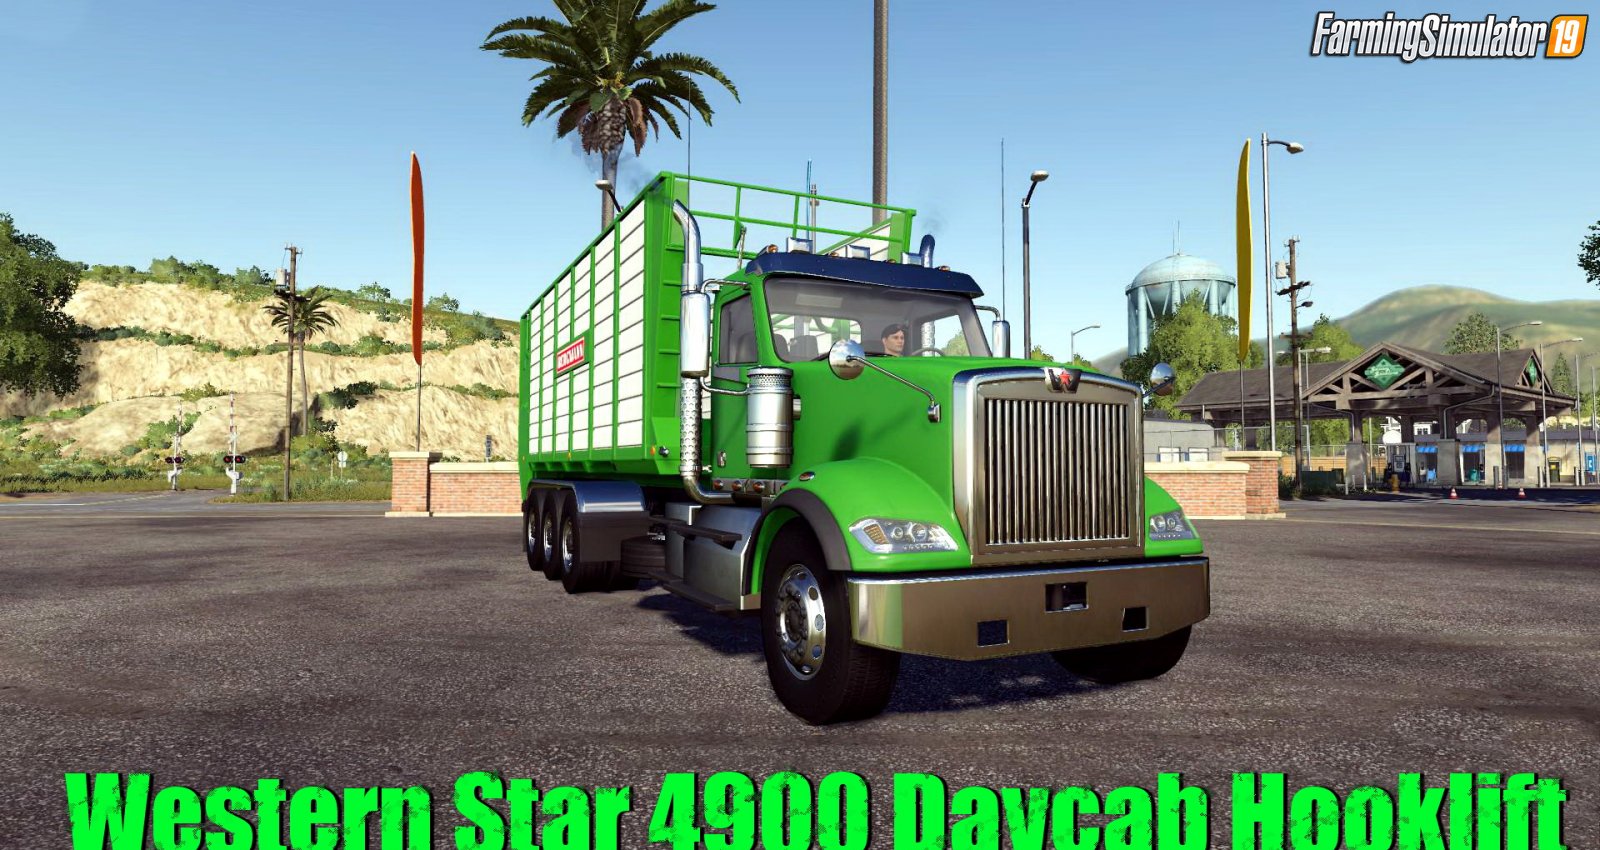 Western Star 4900 Daycab Hooklift for FS19